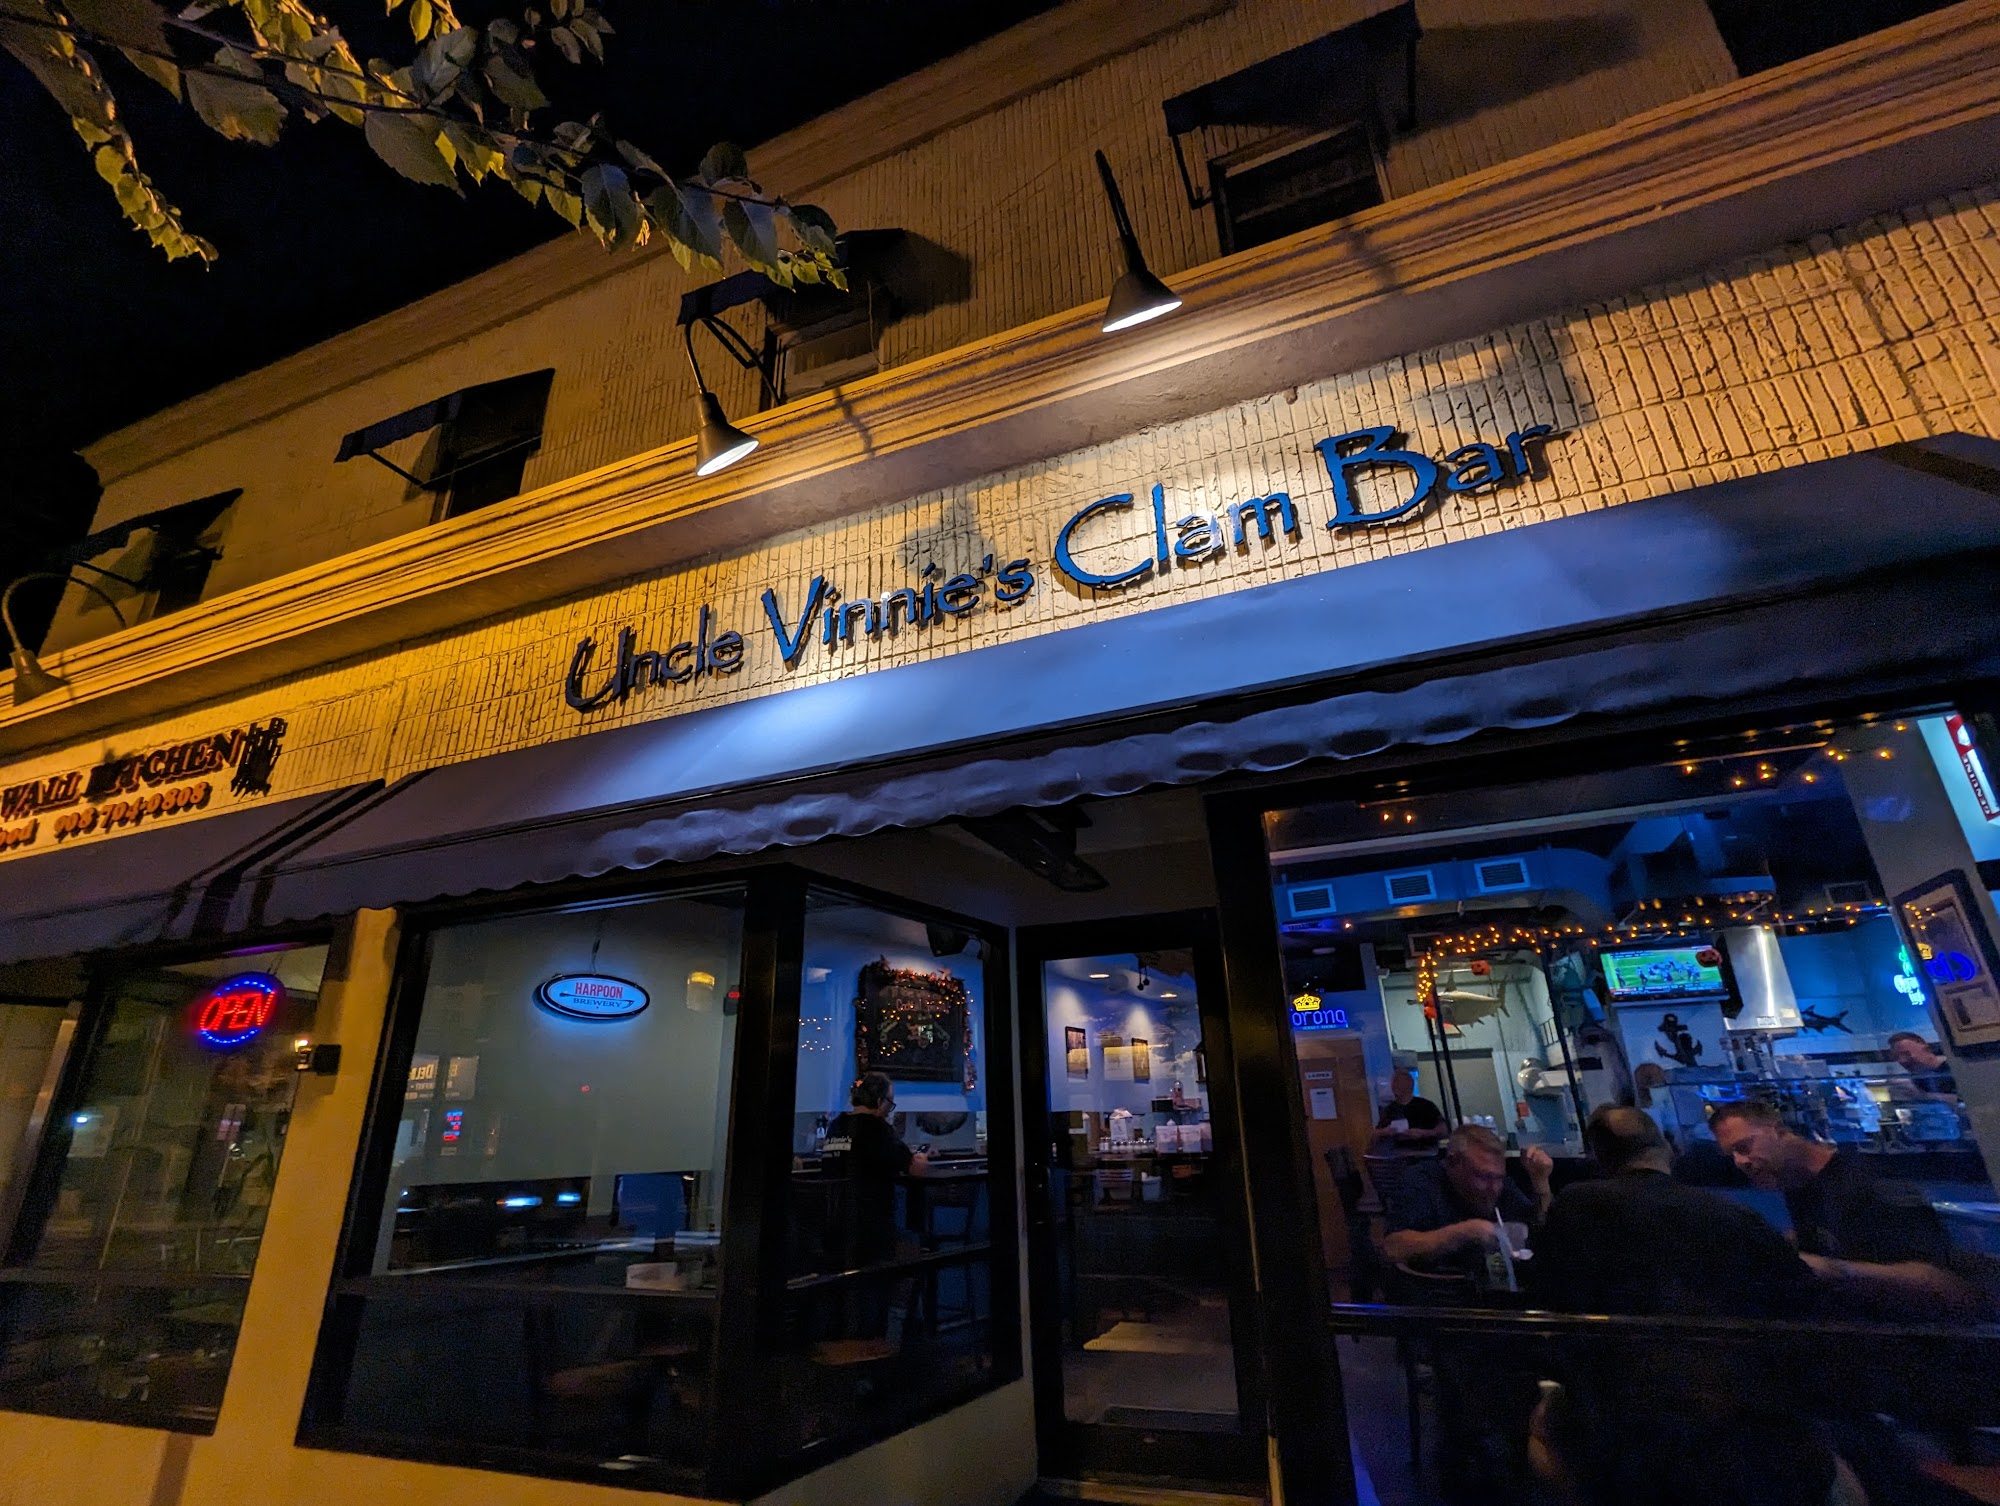 Uncle Vinnie's Clam Bar